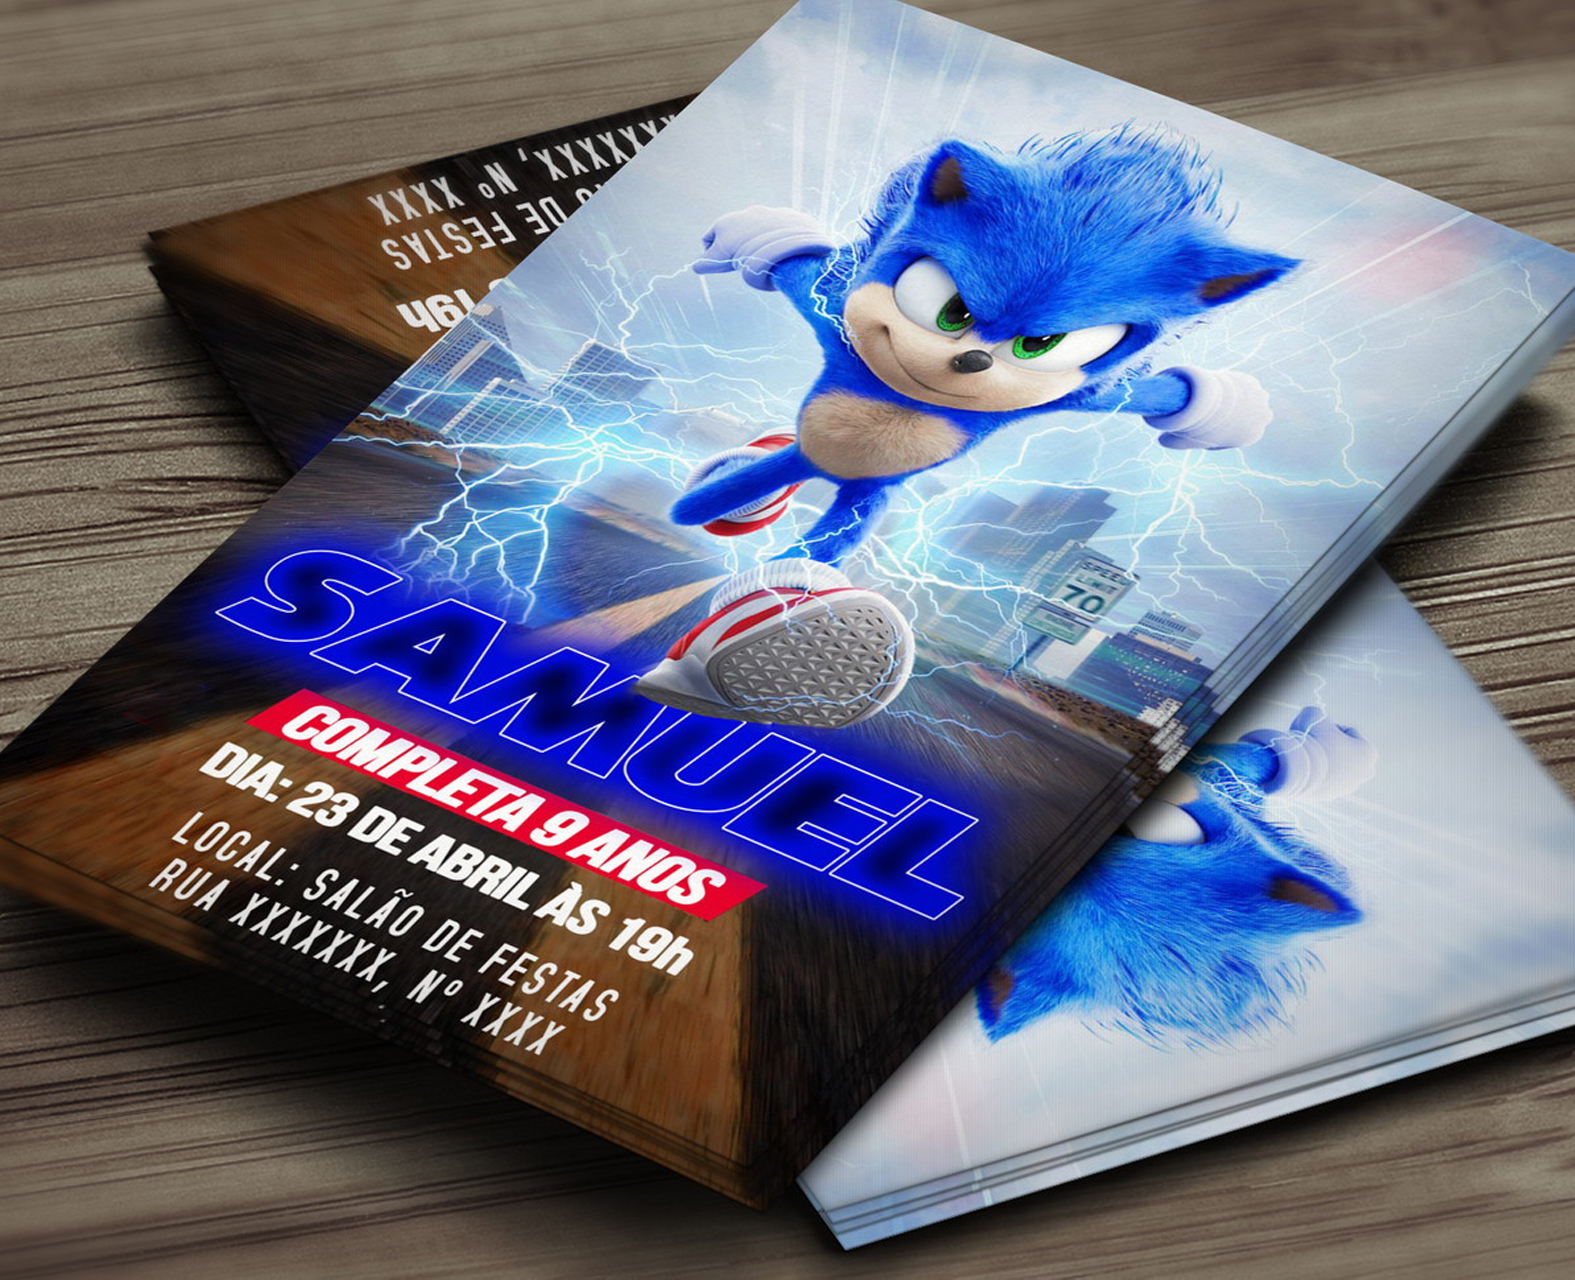 Criar convite de aniversário - Convite Sonic